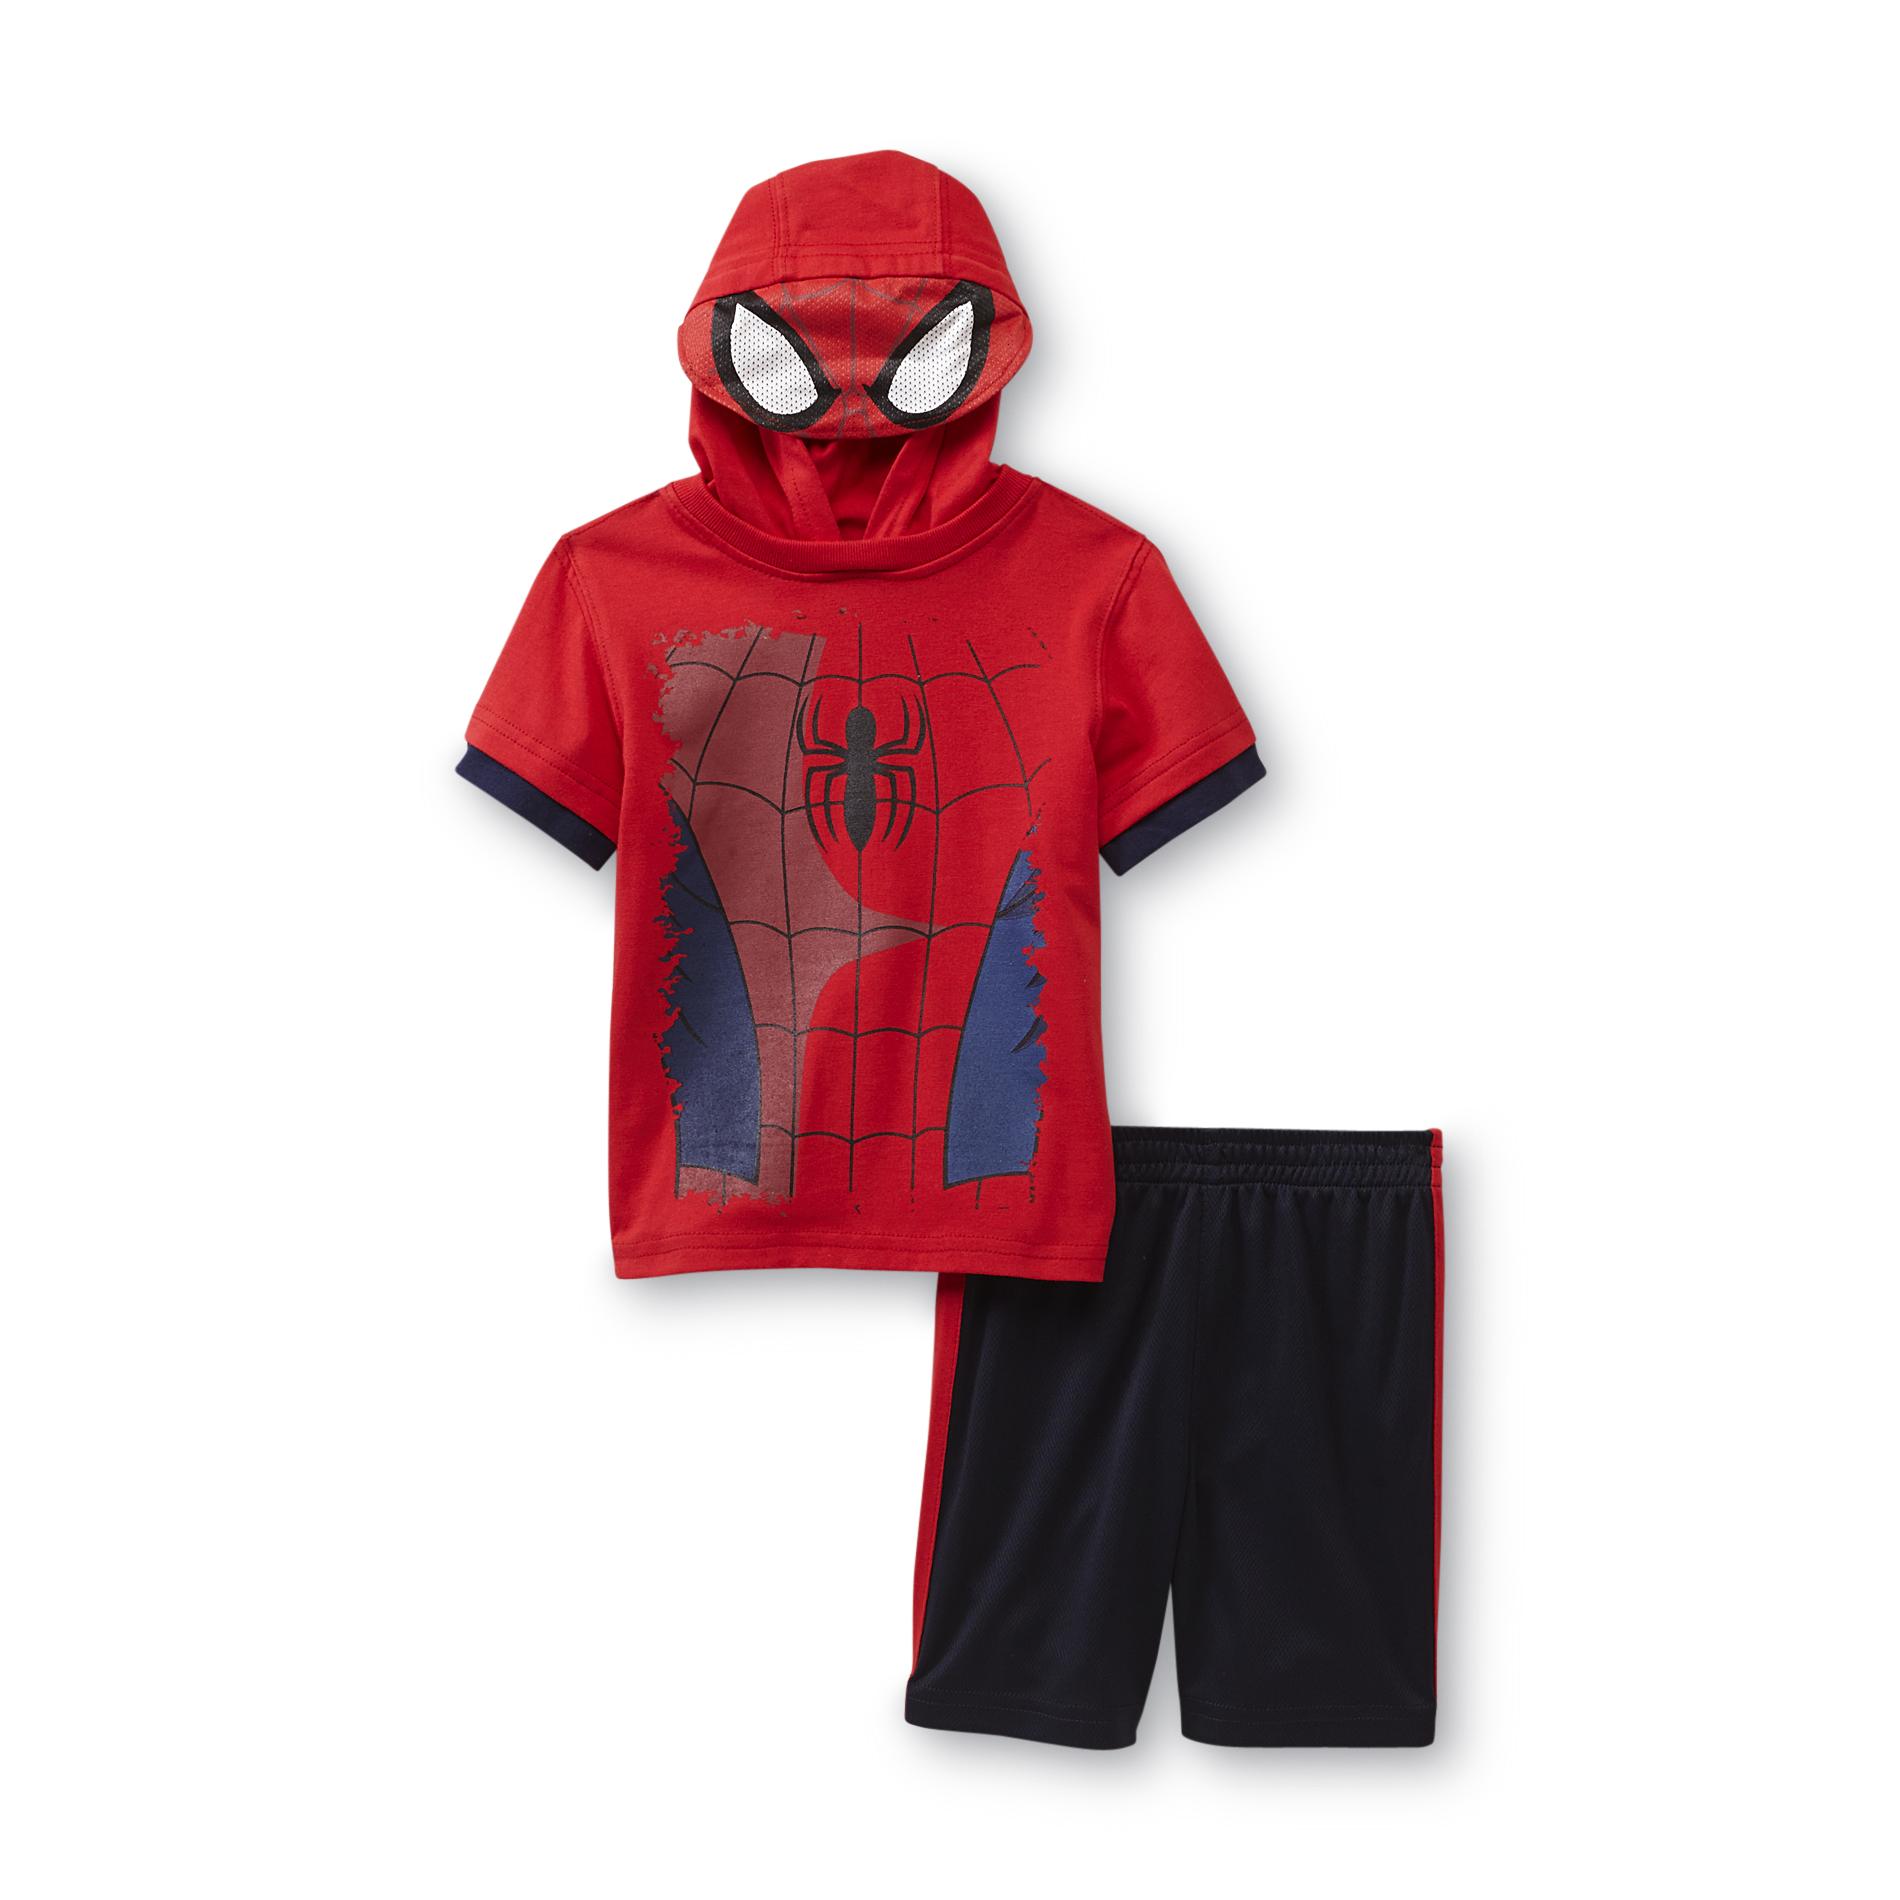 Marvel Comics Spider-Man Toddler Boy's Hooded T-Shirt & Mesh Shorts